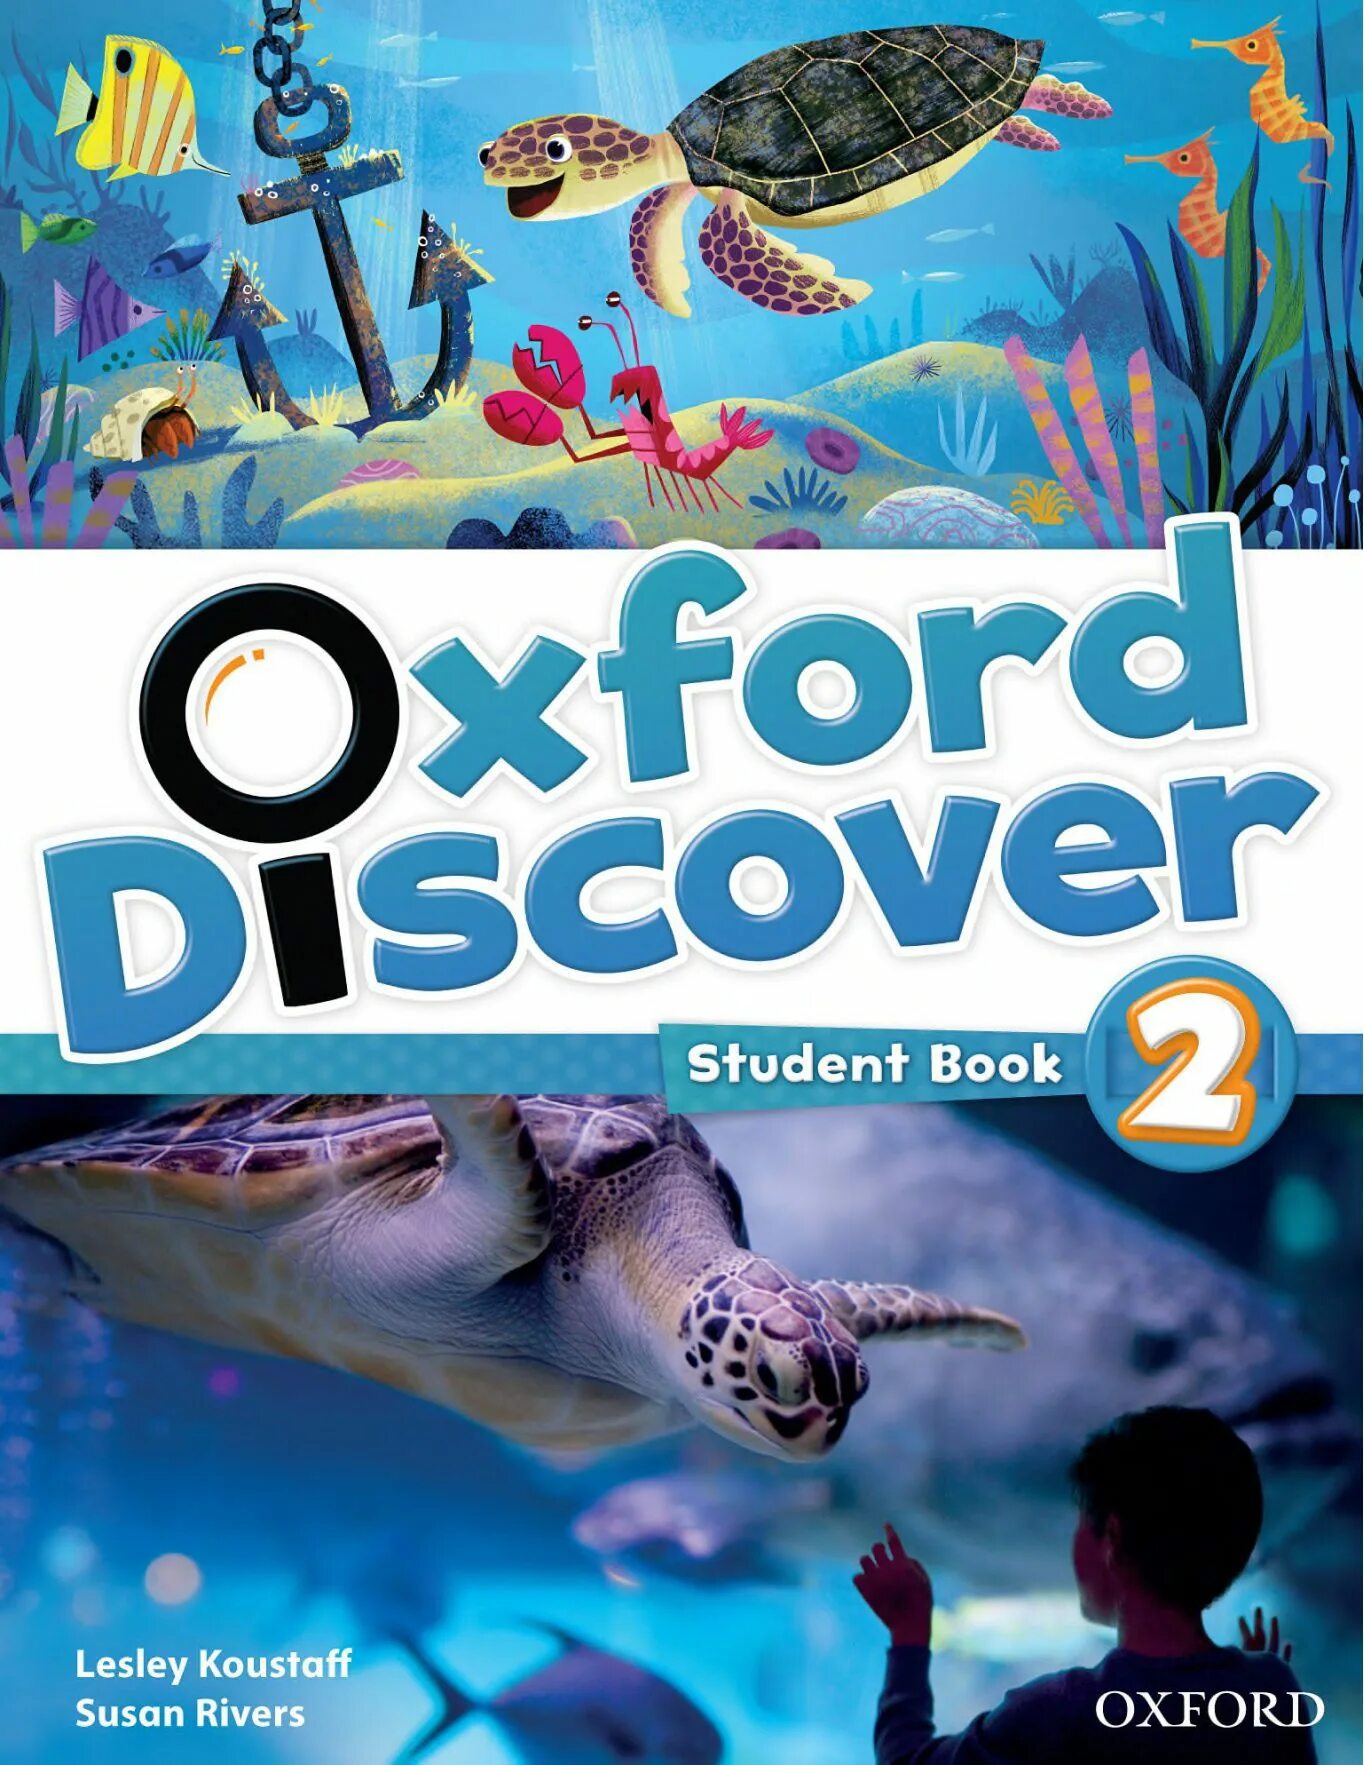 Oxford discover book